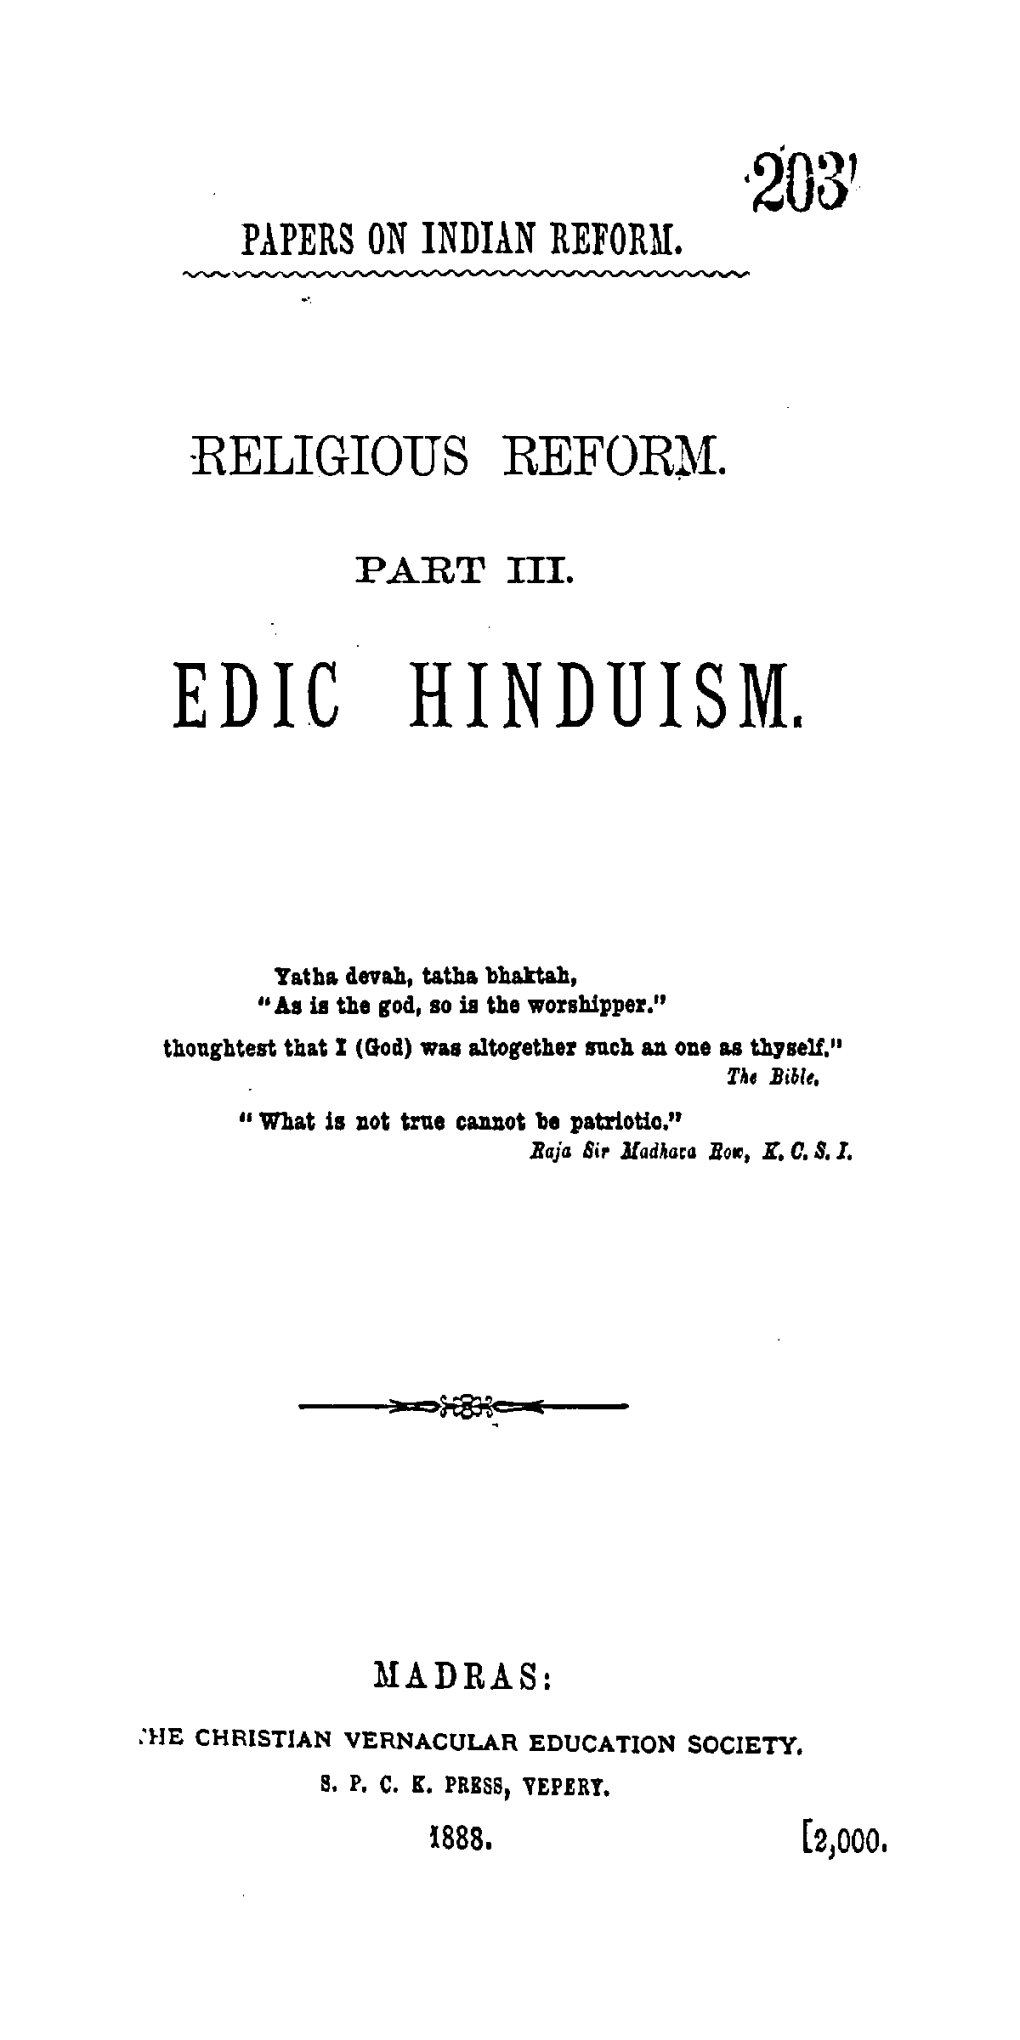 Edic Hinduism